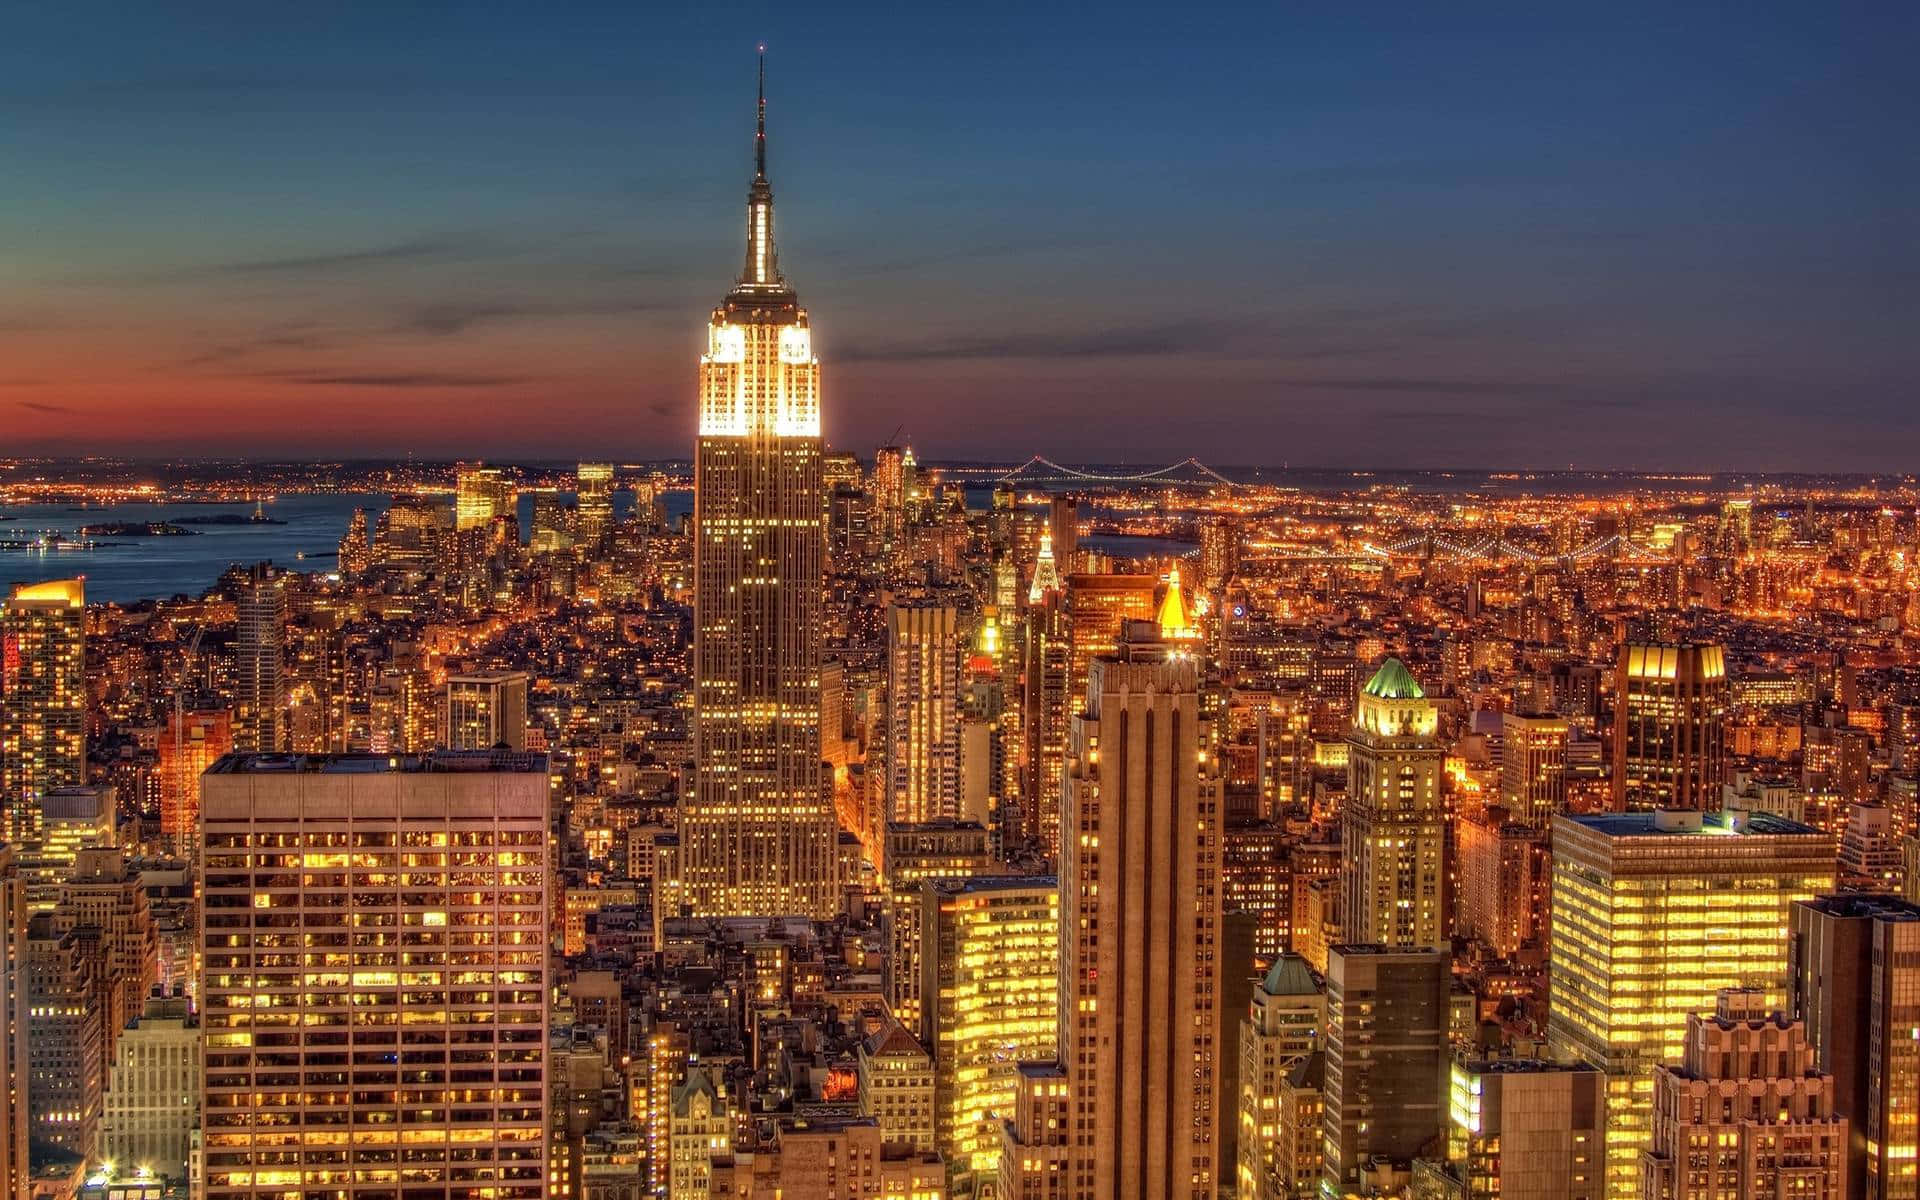 New York City By Night - Skyline Illuminated